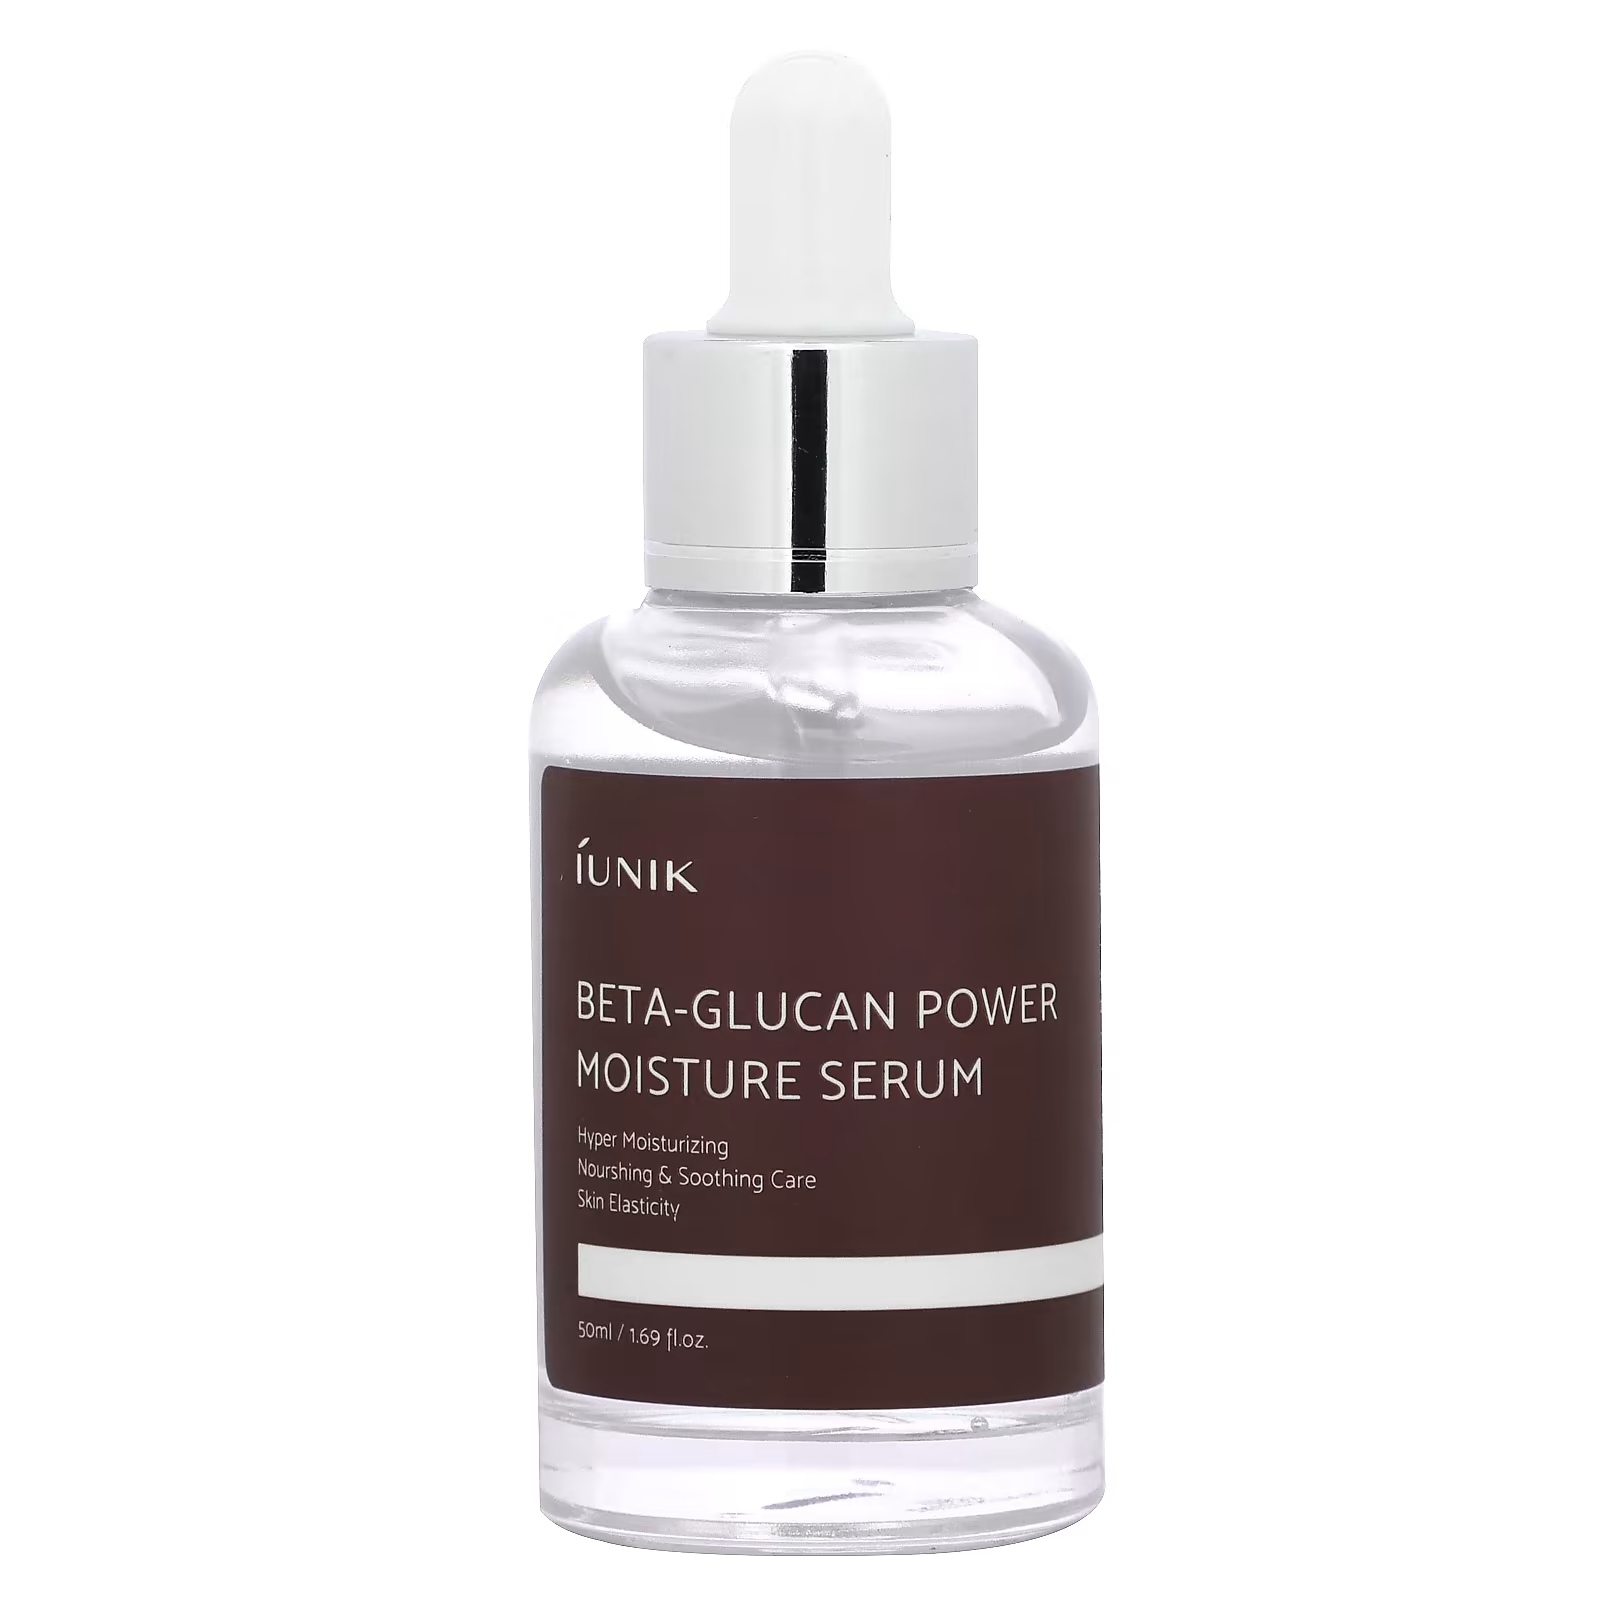 Сыворотка увлажняющая iUNIK Beta-Glucan Power, 50 мл iunik beta glucan power moisture serum интенсивно увлажняющая сыворотка для кожи лица с 98% бета глюканом 50 мл